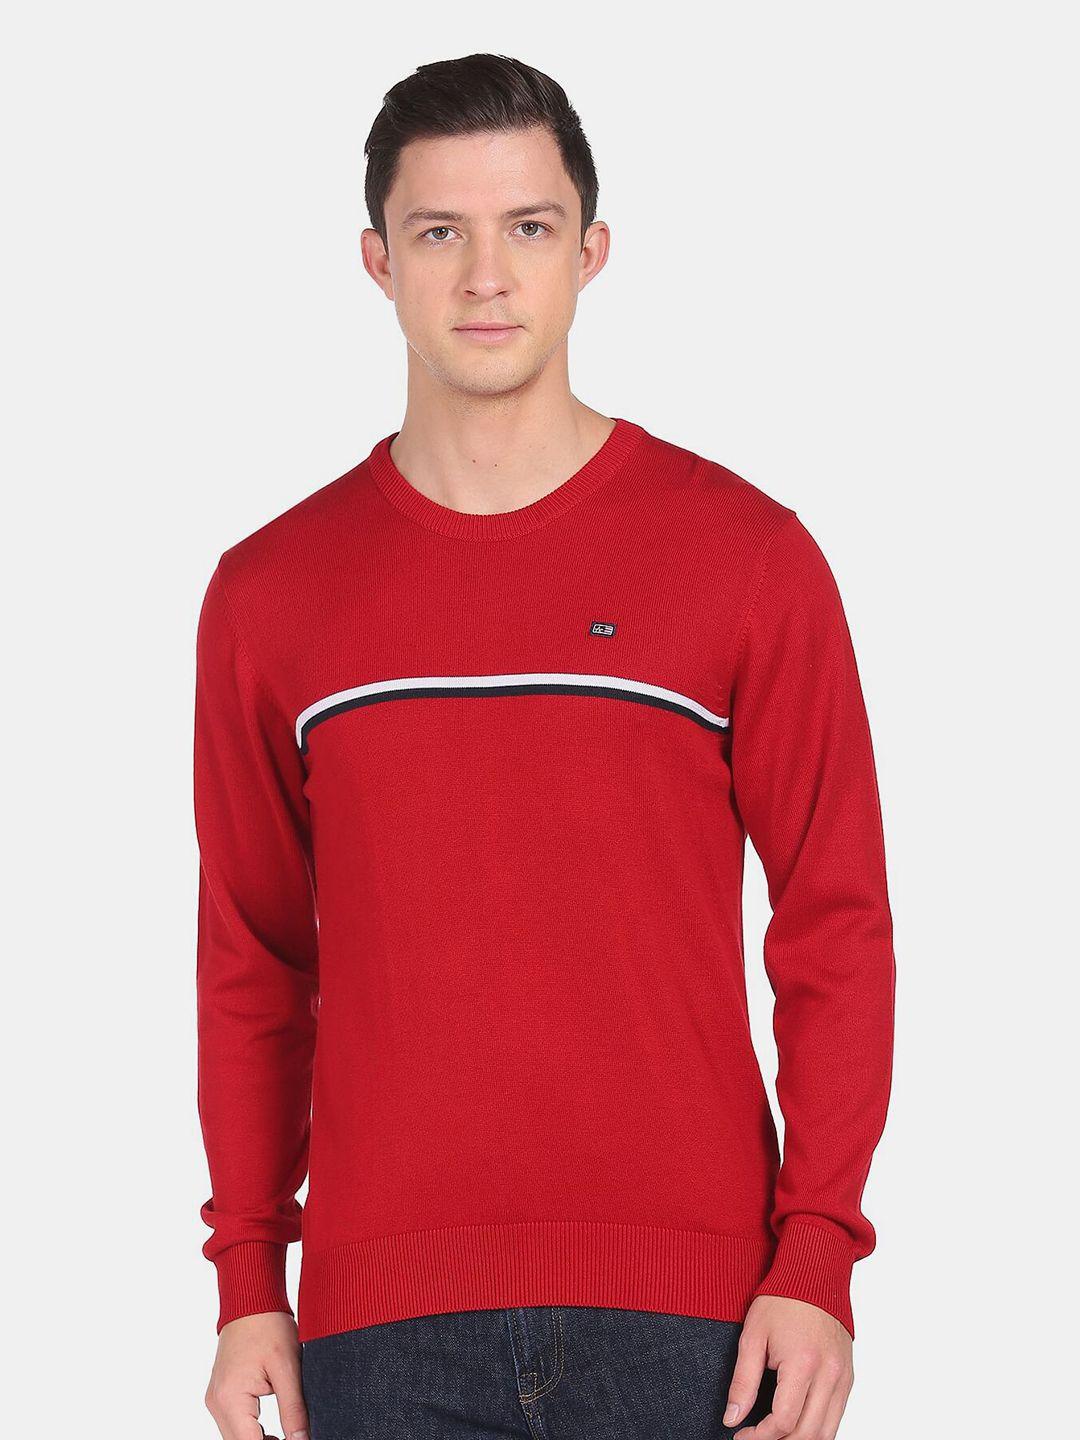 arrow-sport-men-red-&-white-cotton-pullover